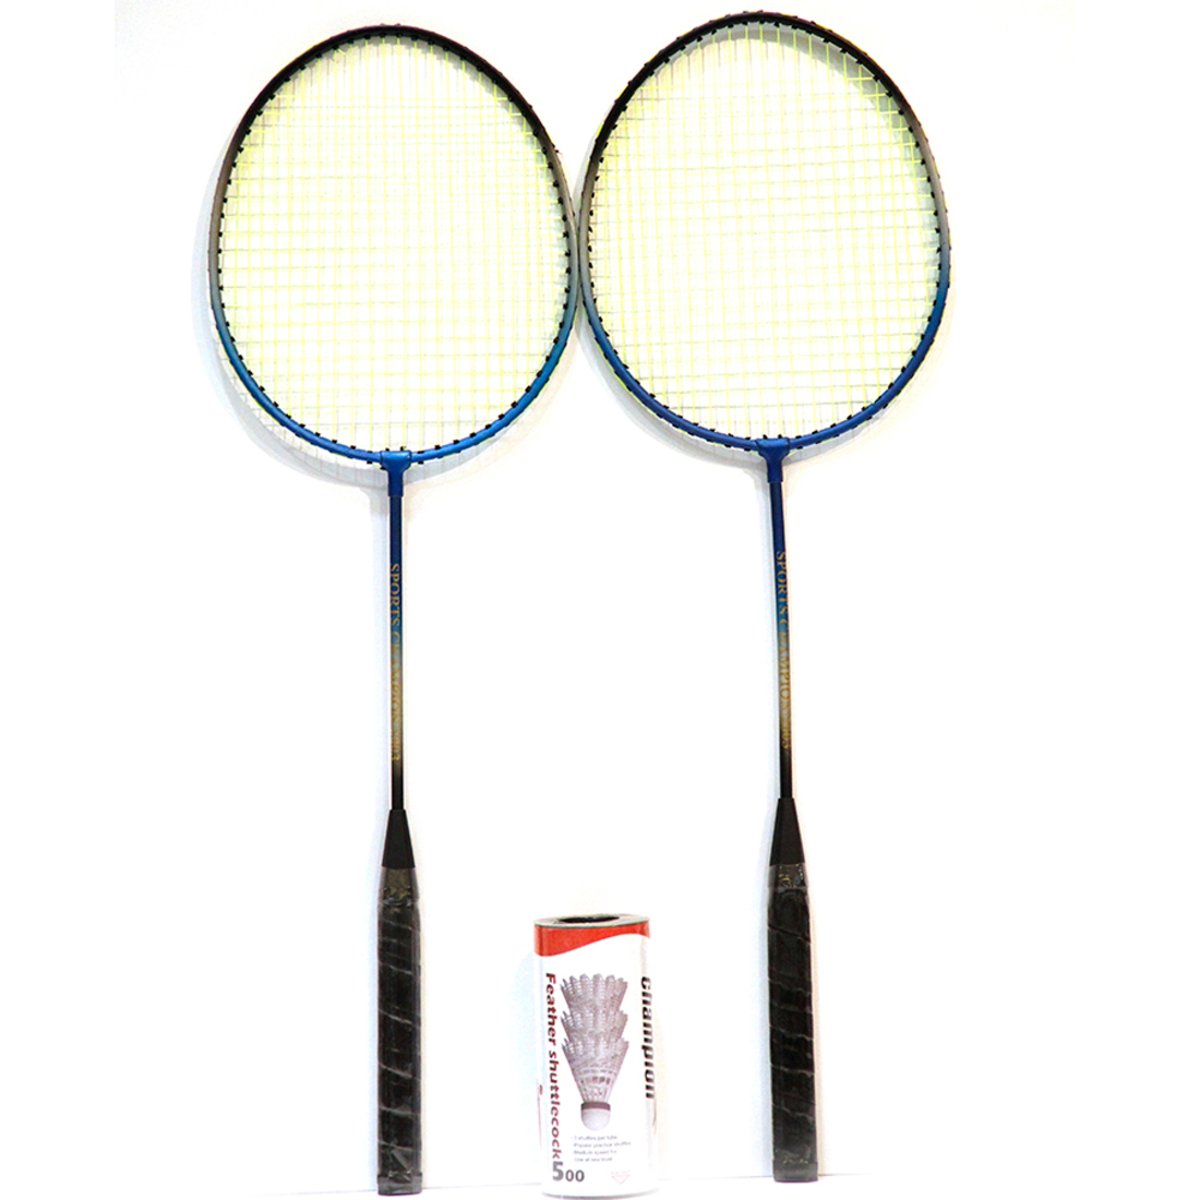 Sports Champion Badminton Set 2003